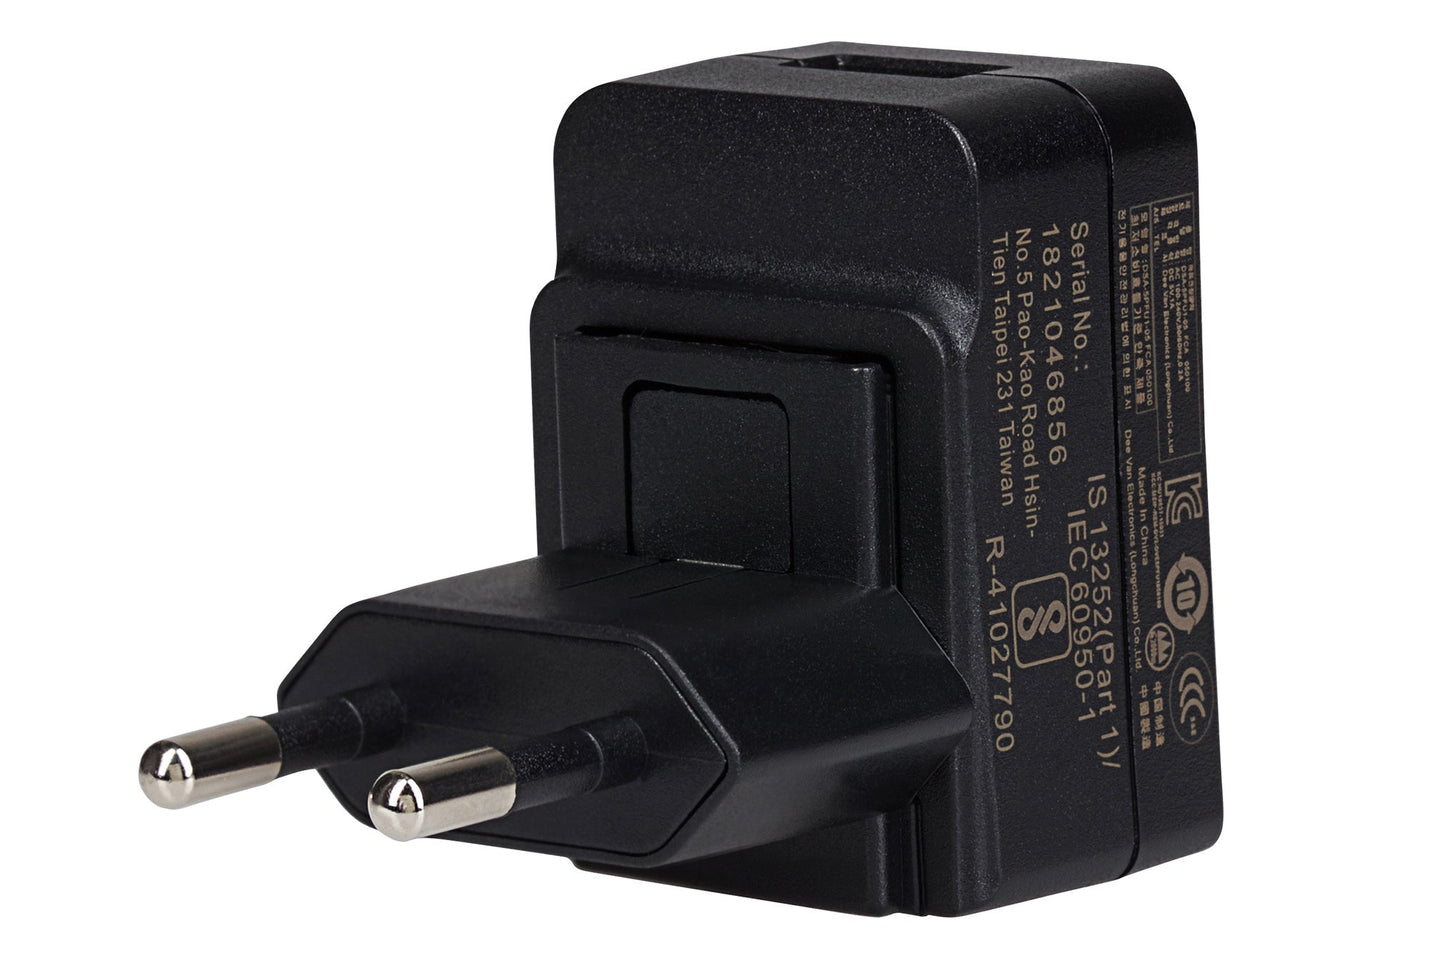 Maplin 1-Port USB-A EU Wall Charger 5V 1 Amp 100-240V Travel Adapter - Black - maplin.co.uk